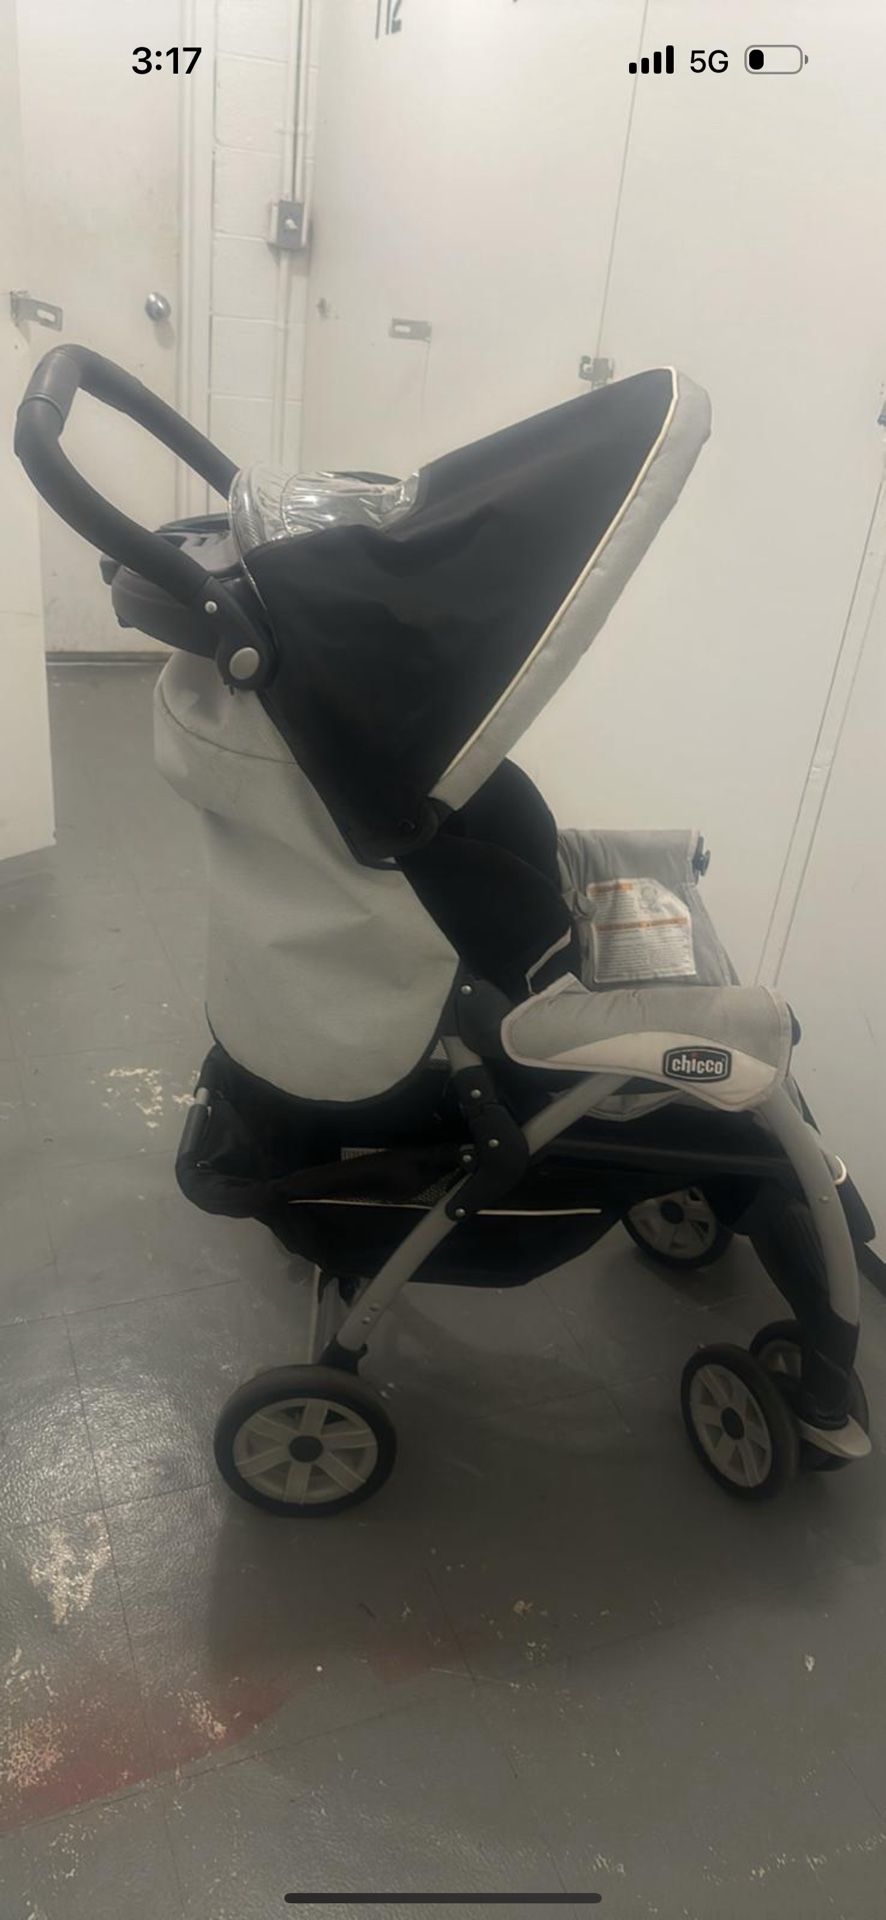 Stroller For Babies 